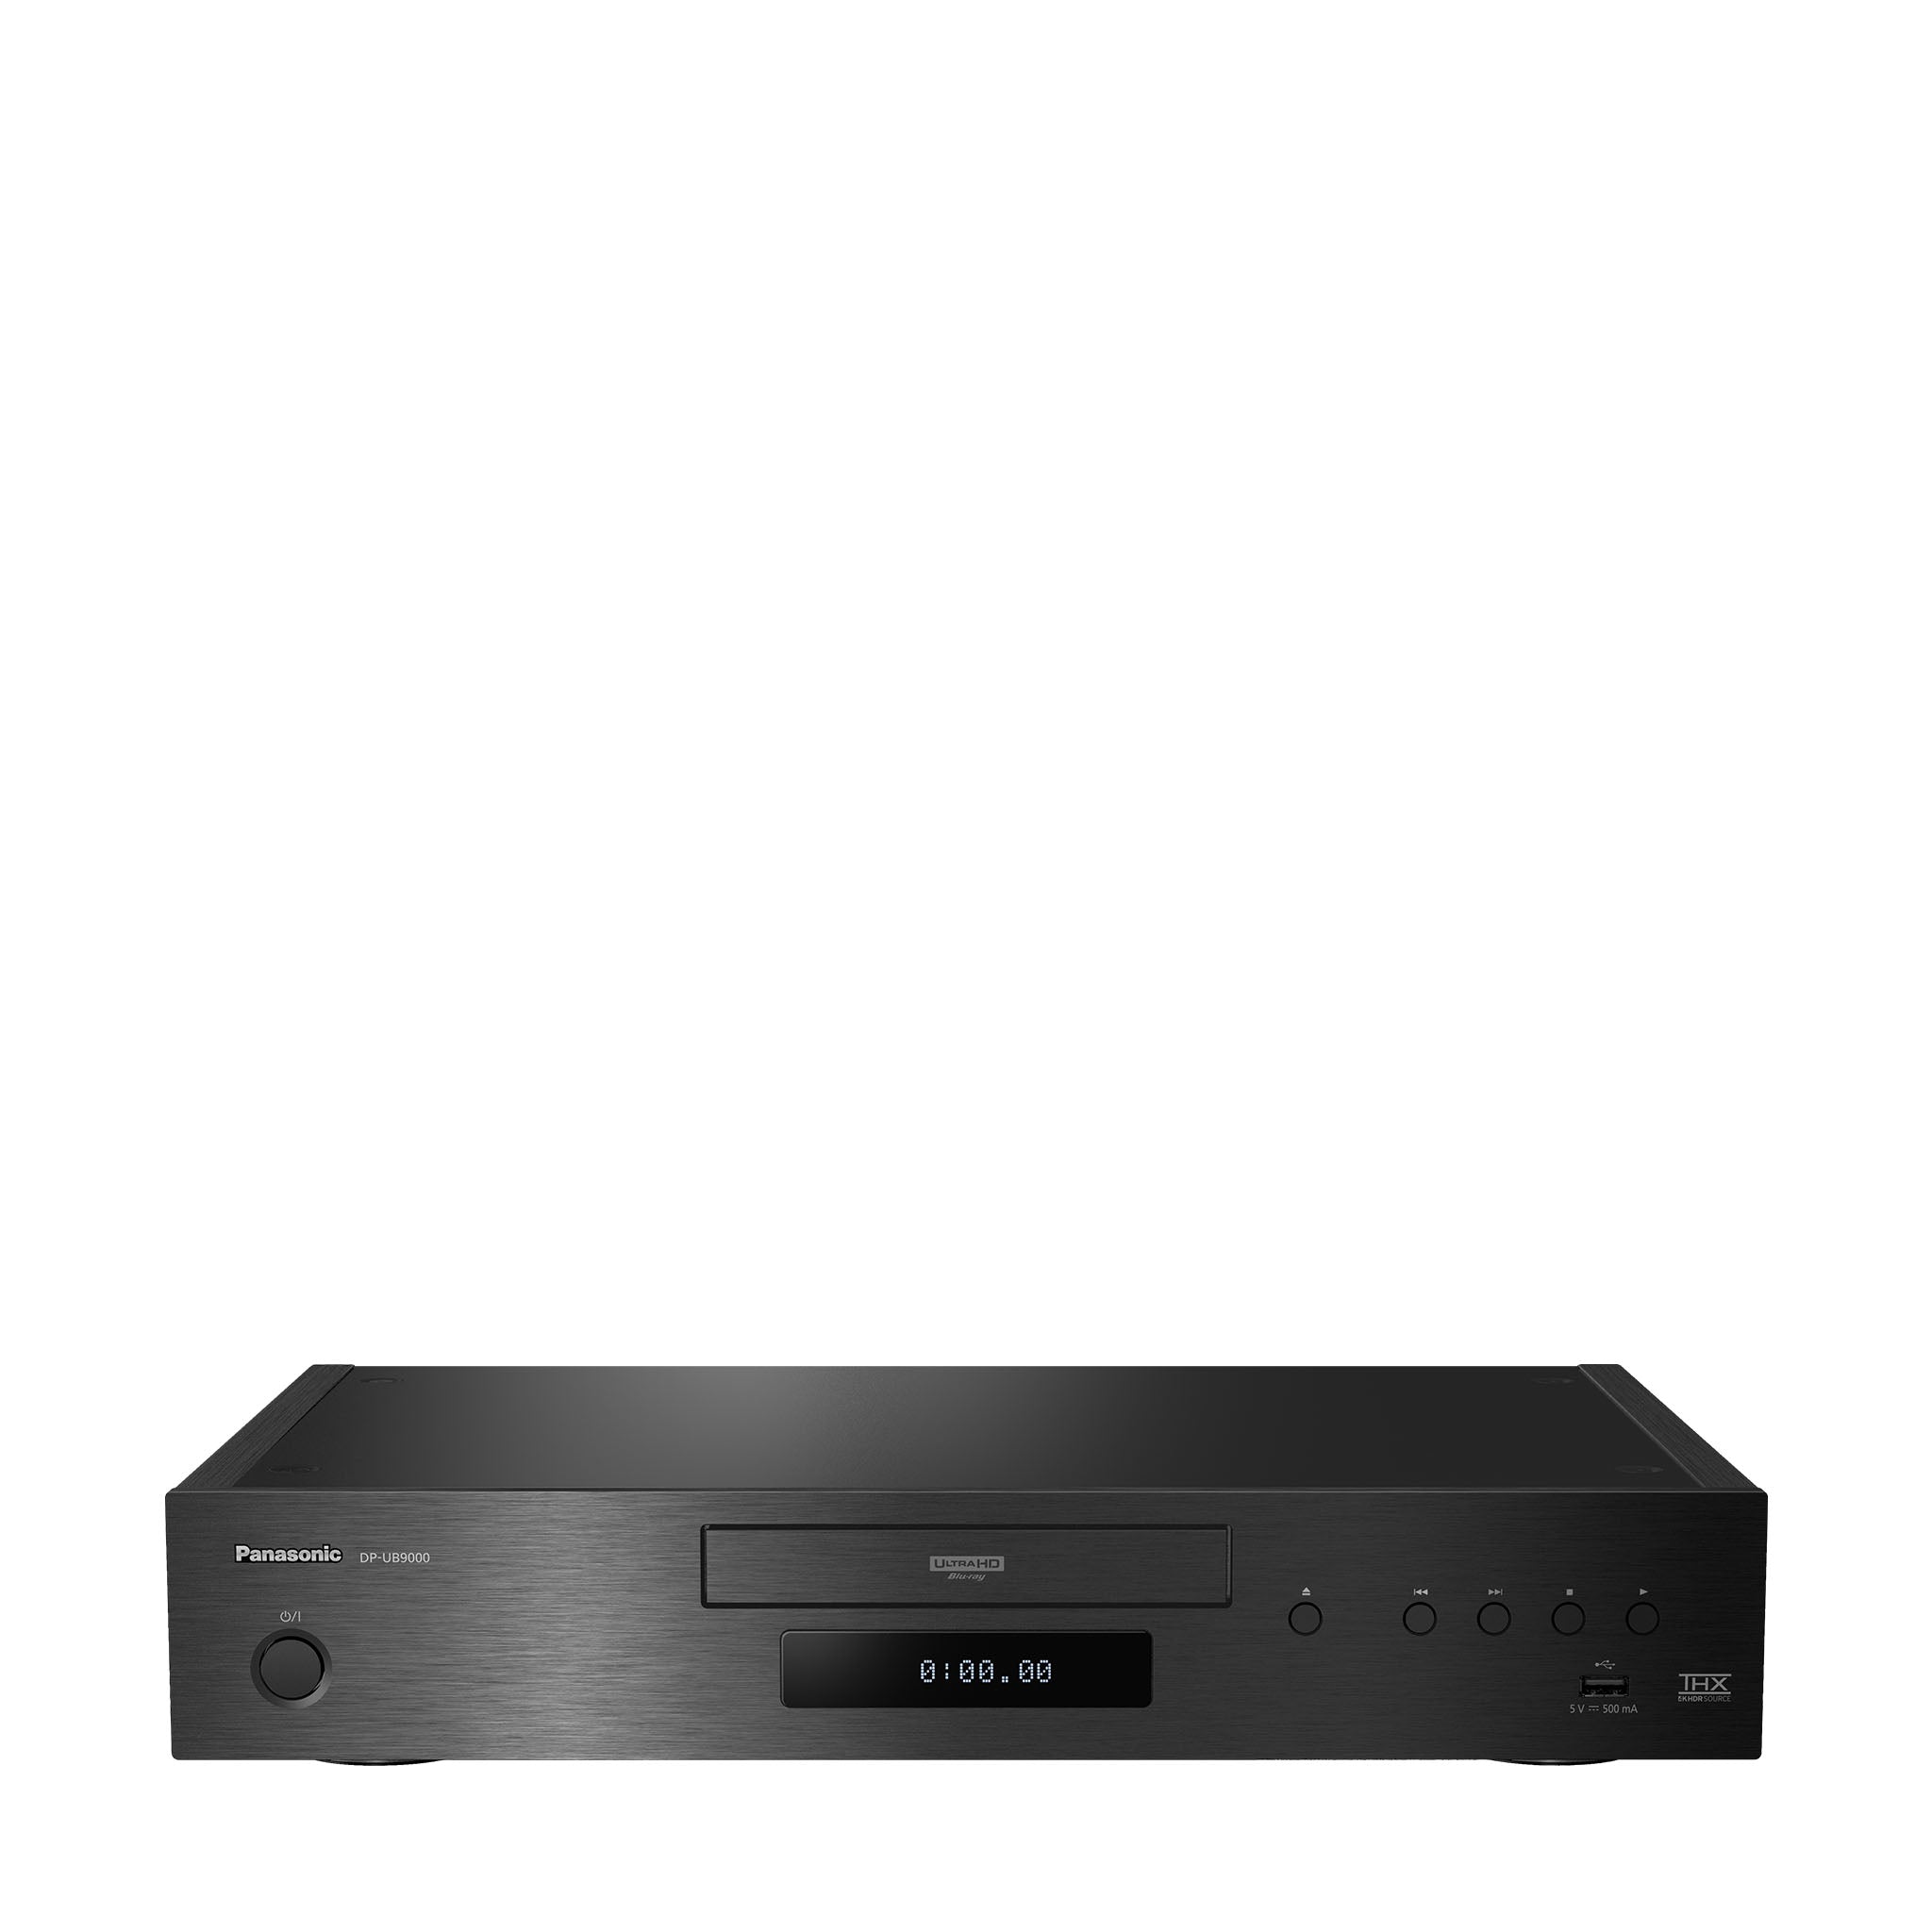 HD Ultra Streaming and Blu-ray Audio 4K Panasonic Premium - Video Playback Hi-Res Player DP-UB420P-K with